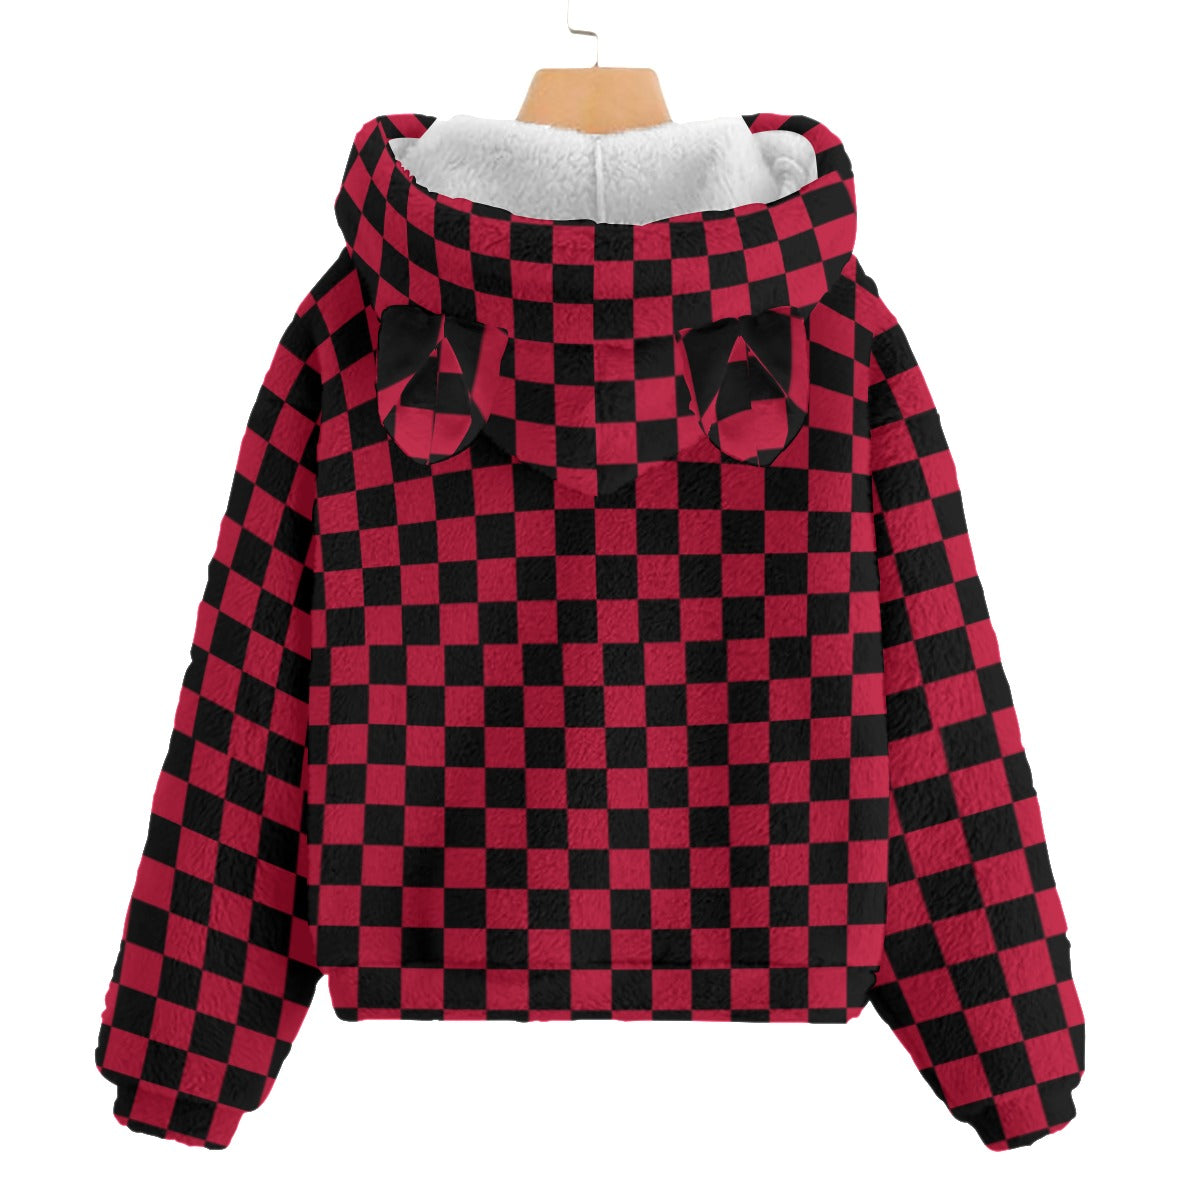 Kid’s Checkerboard Borg Fleece Sweatshirt With Ears